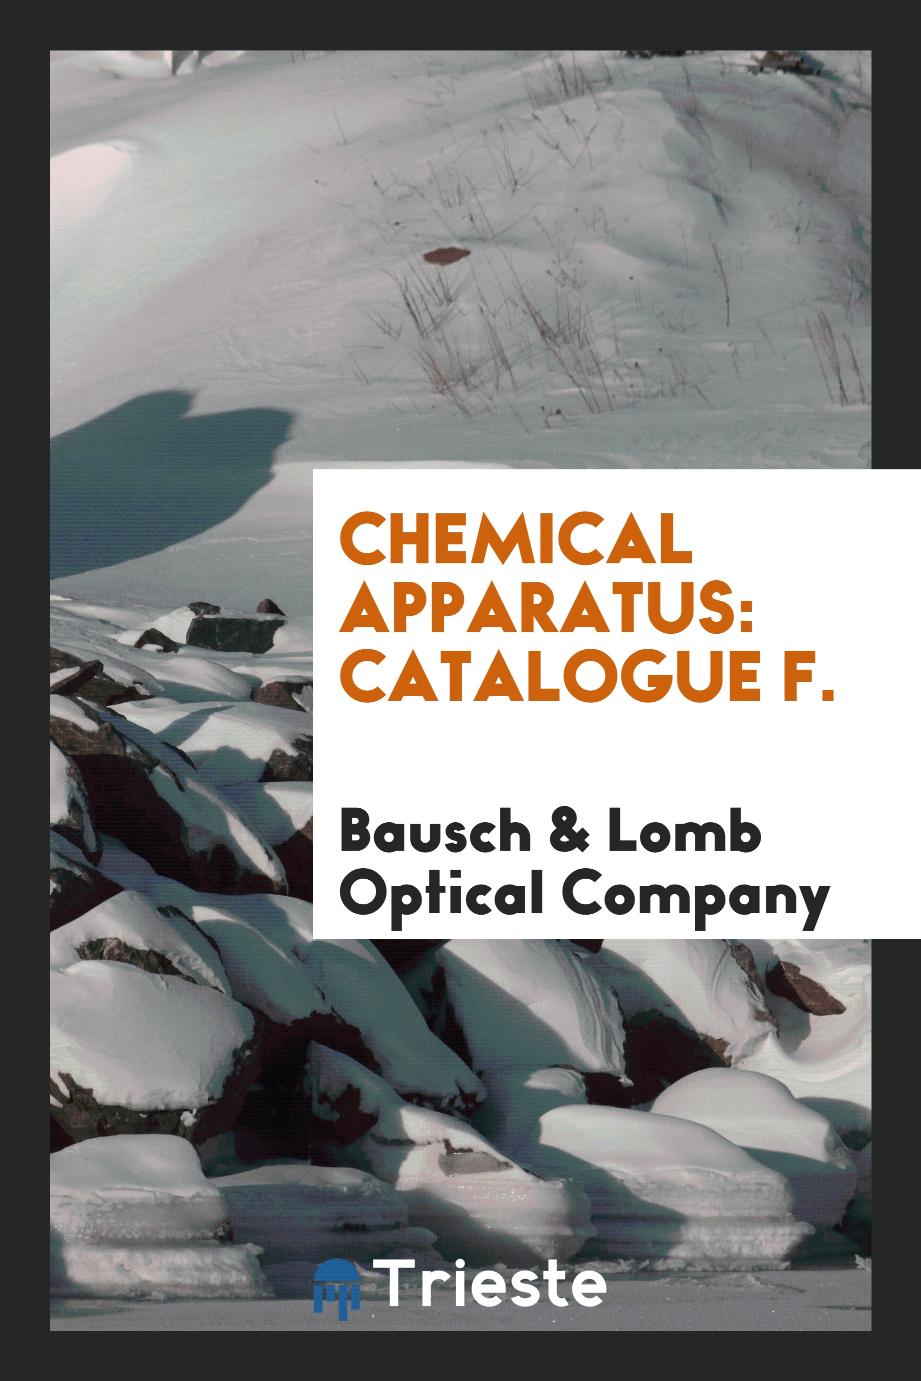 Chemical apparatus: Catalogue F.